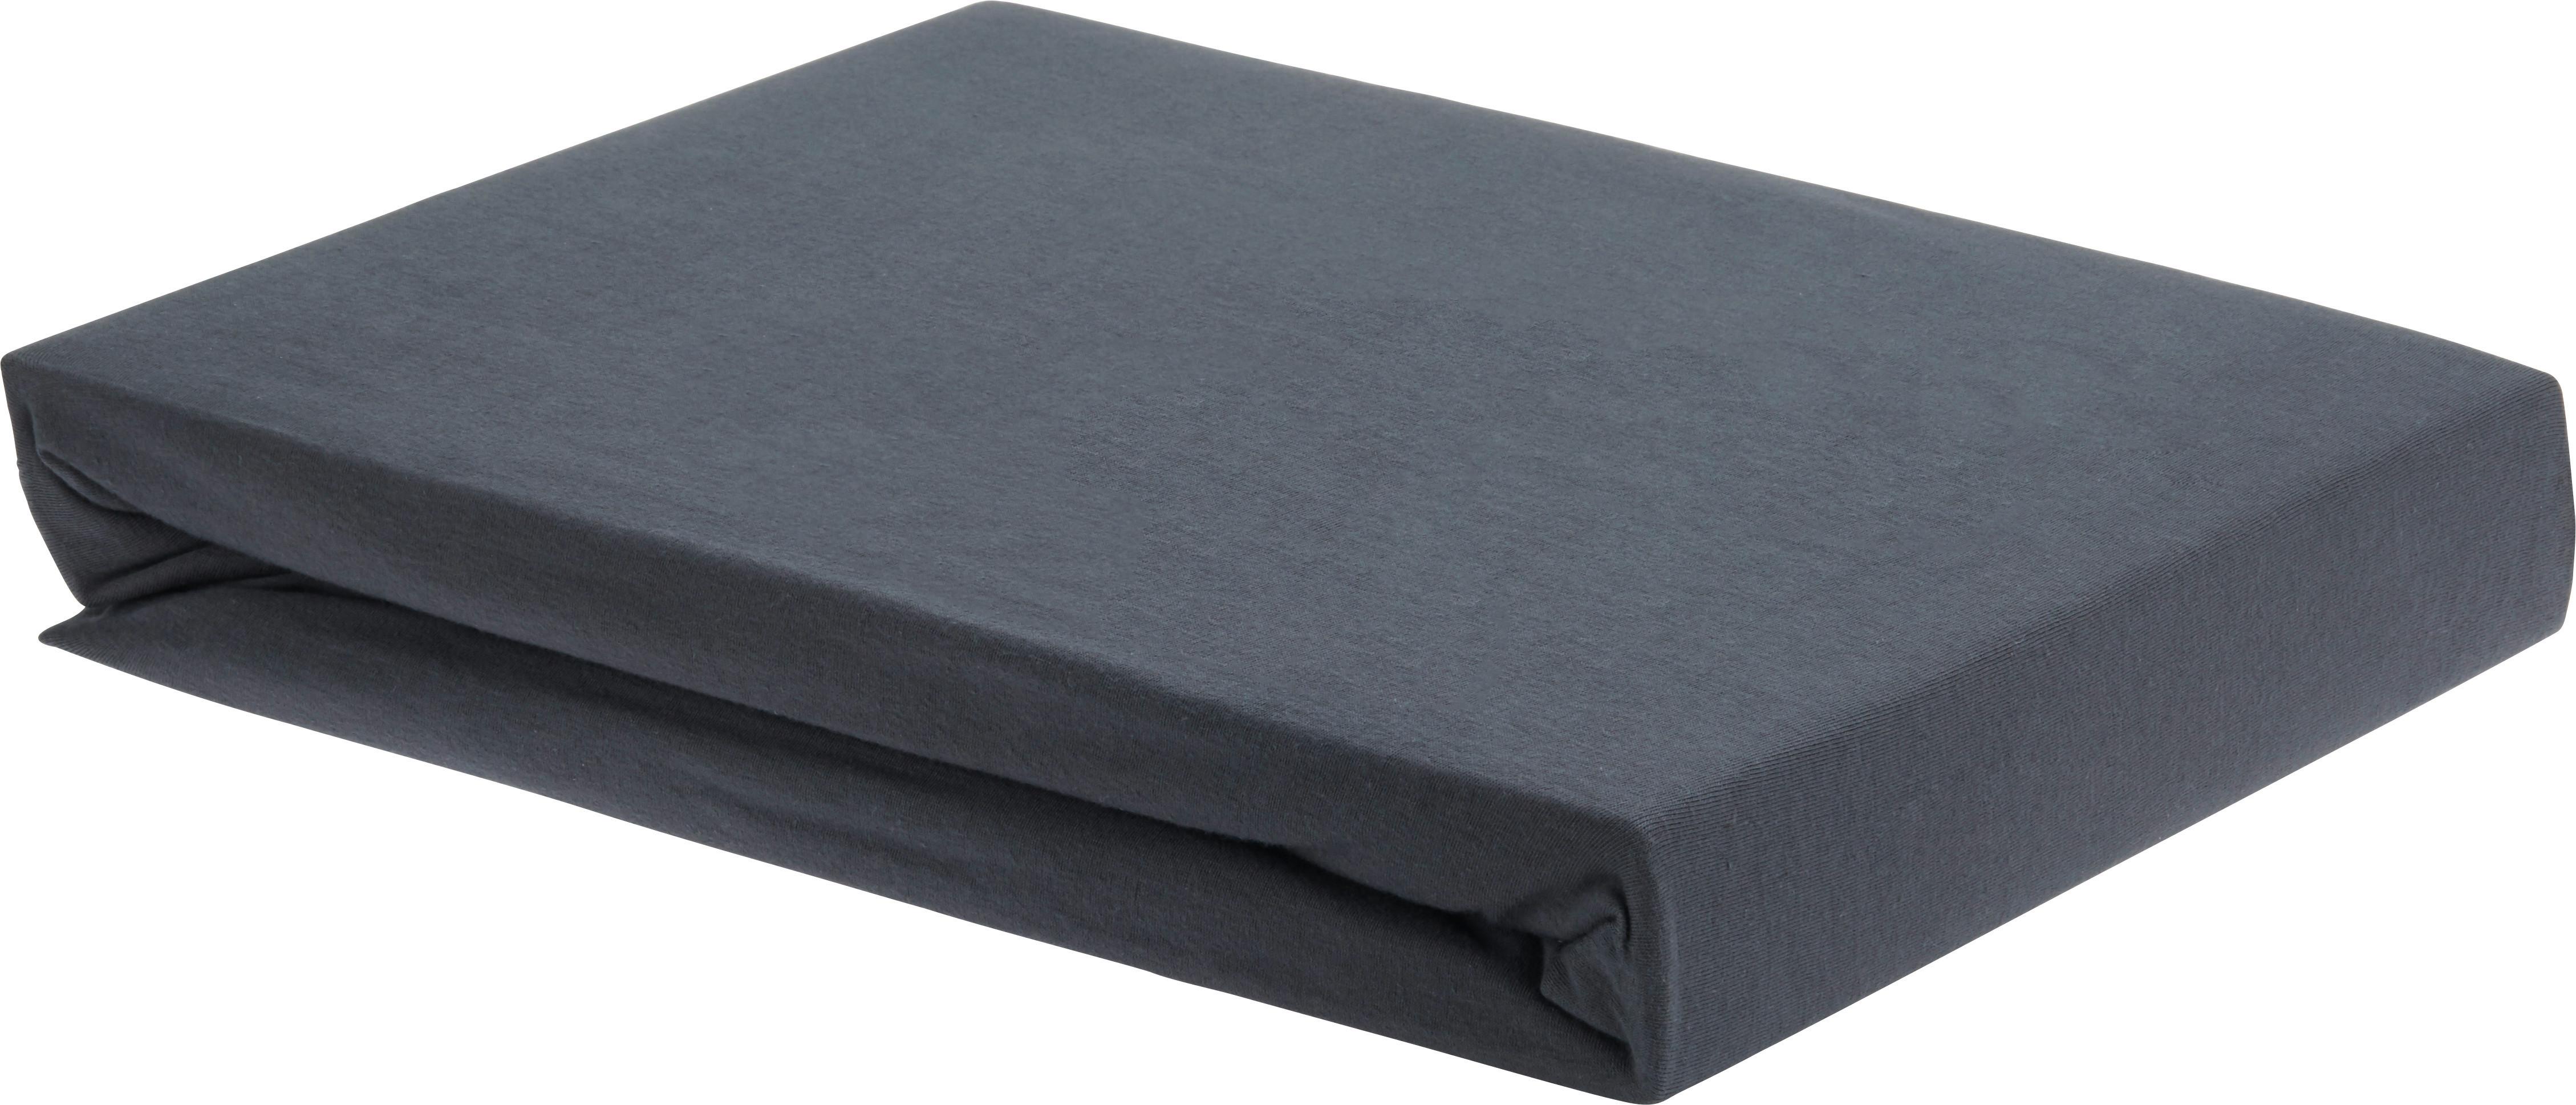 Cearșaf cu elastic Elasthan Hoch - antracit, textil (180/200cm) - Premium Living